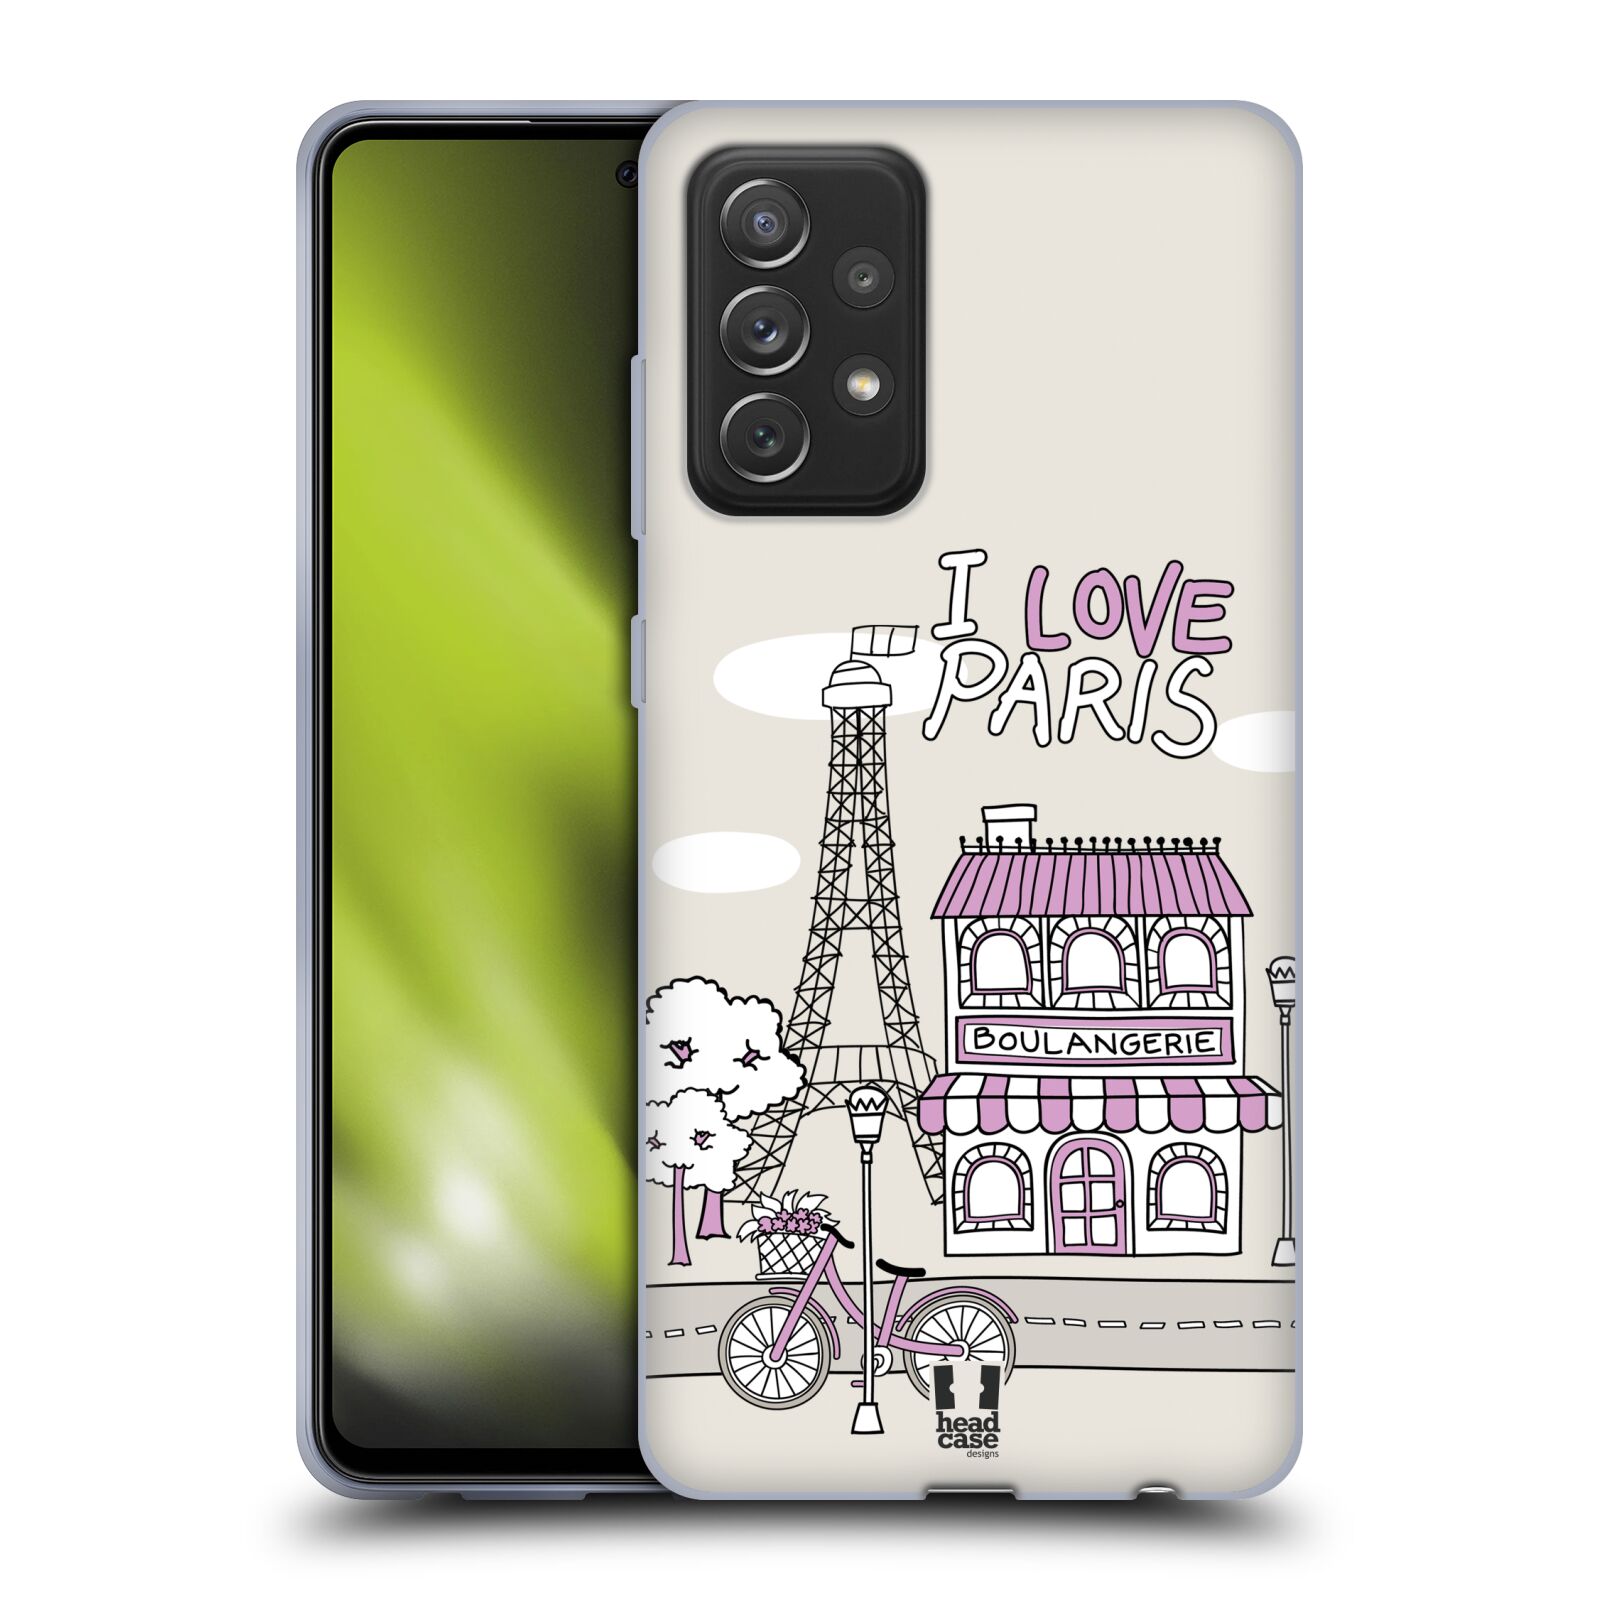 Plastový obal HEAD CASE na mobil Samsung Galaxy A72 / A72 5G vzor Kreslená městečka FIALOVÁ, Paříž, Francie, I LOVE PARIS